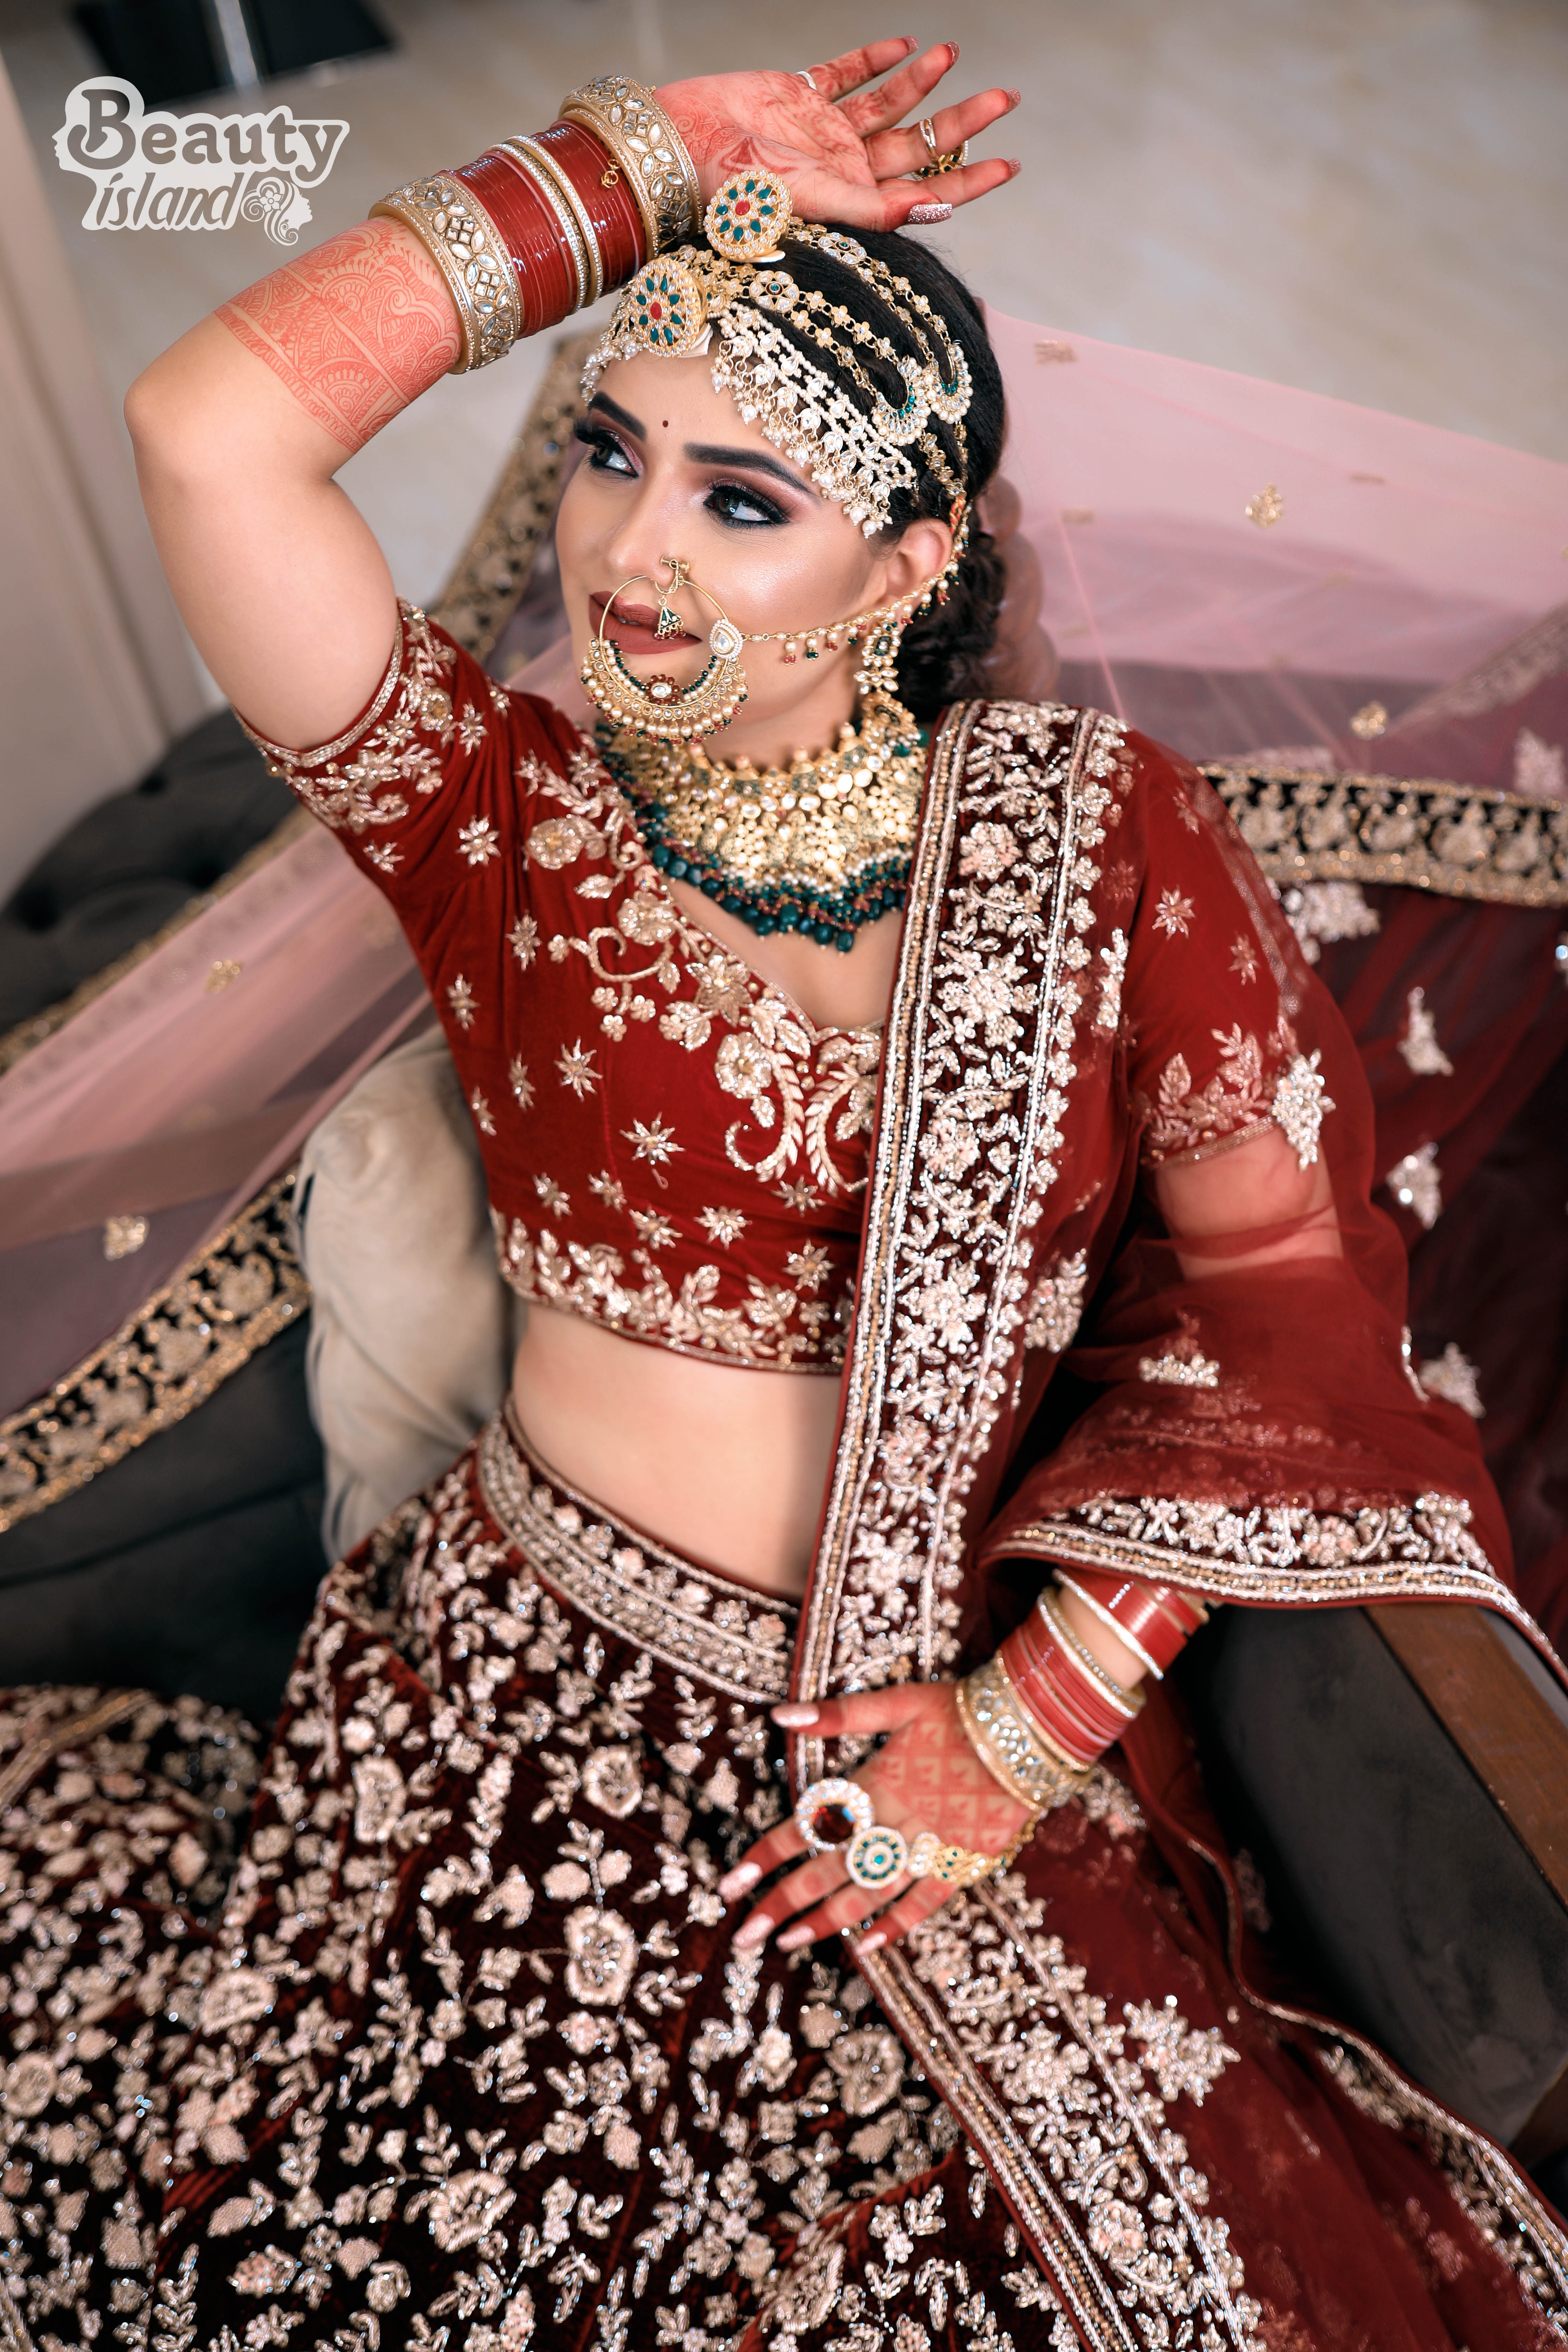 Beauty island - Bridal Makeup in Patna Active Life | Salon